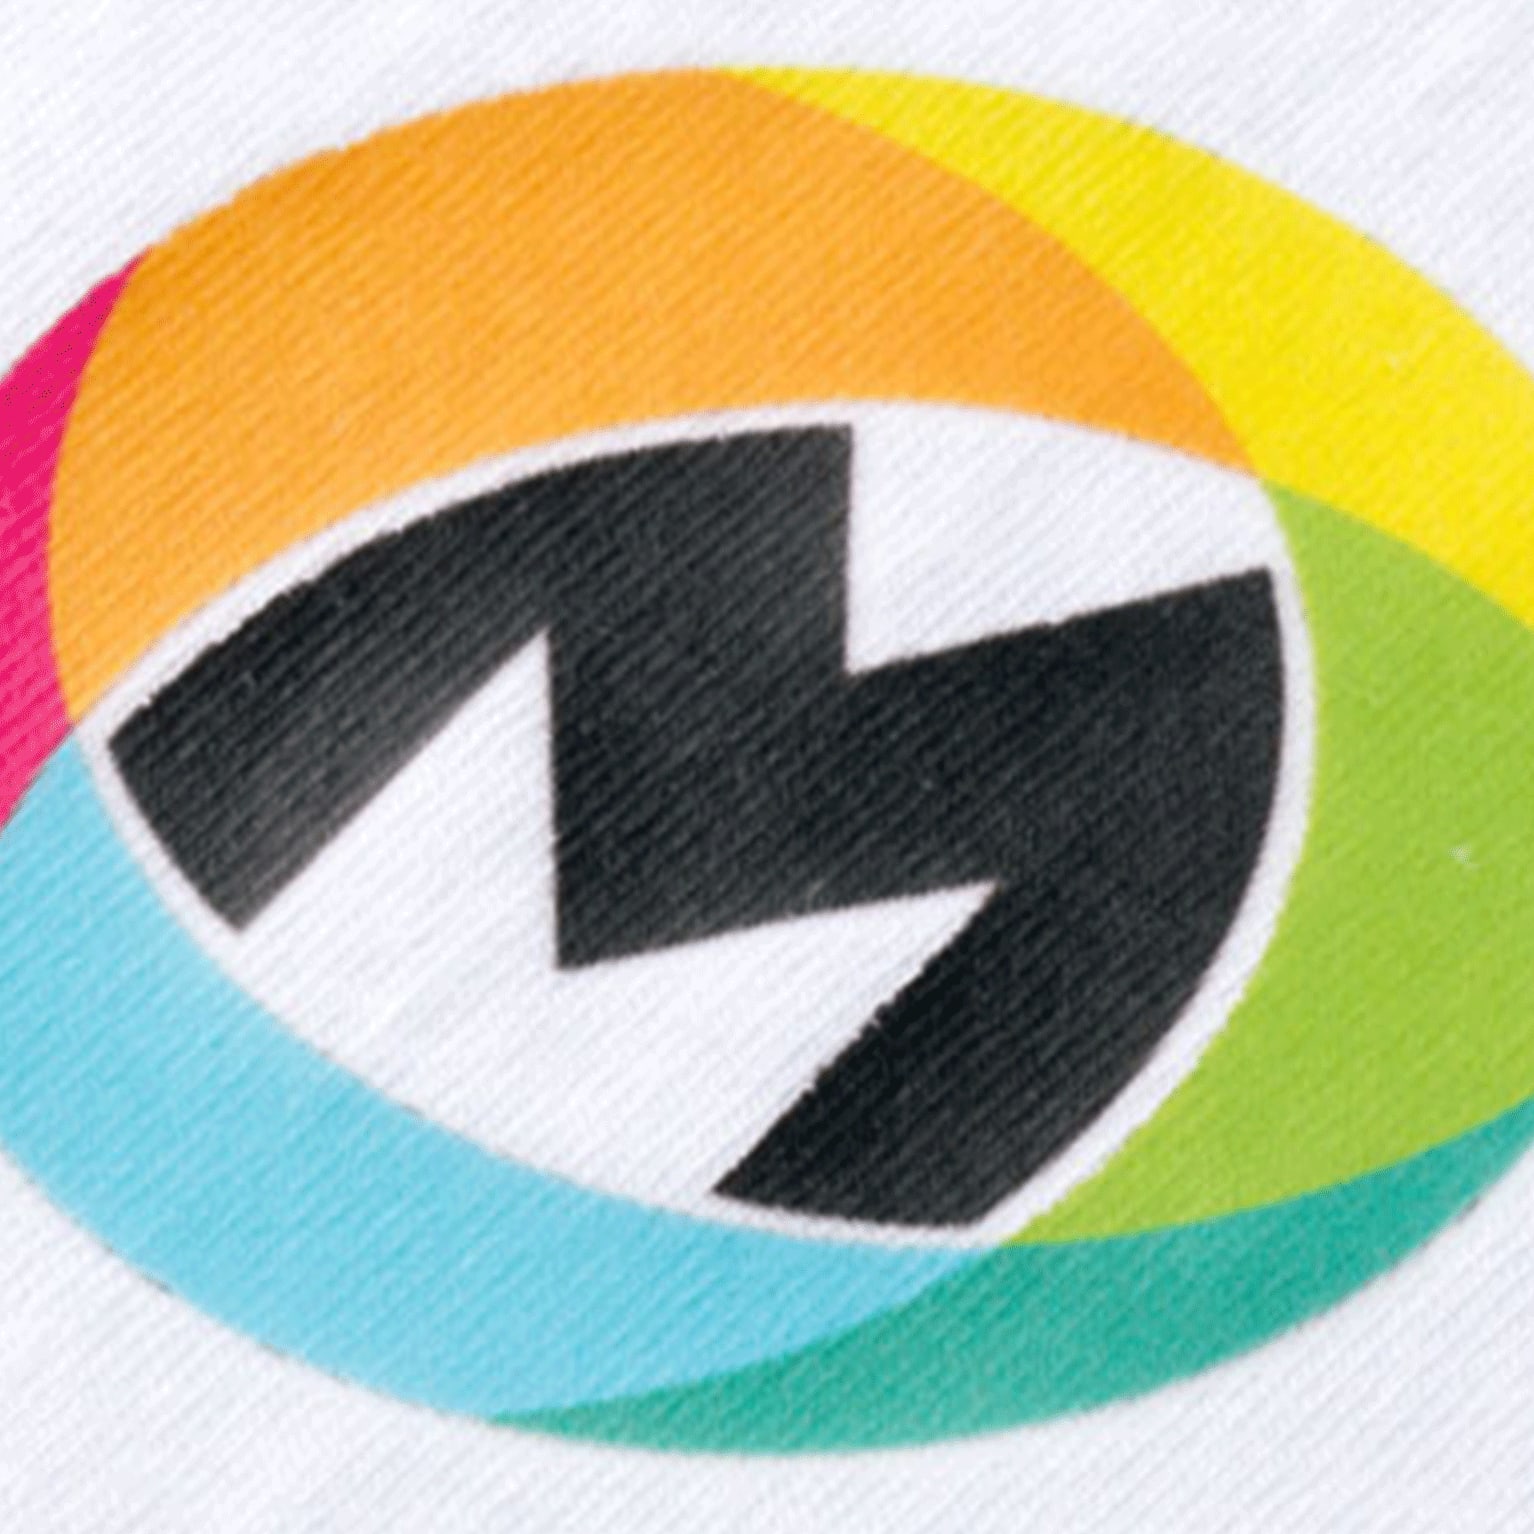 full-color transfer printed logo